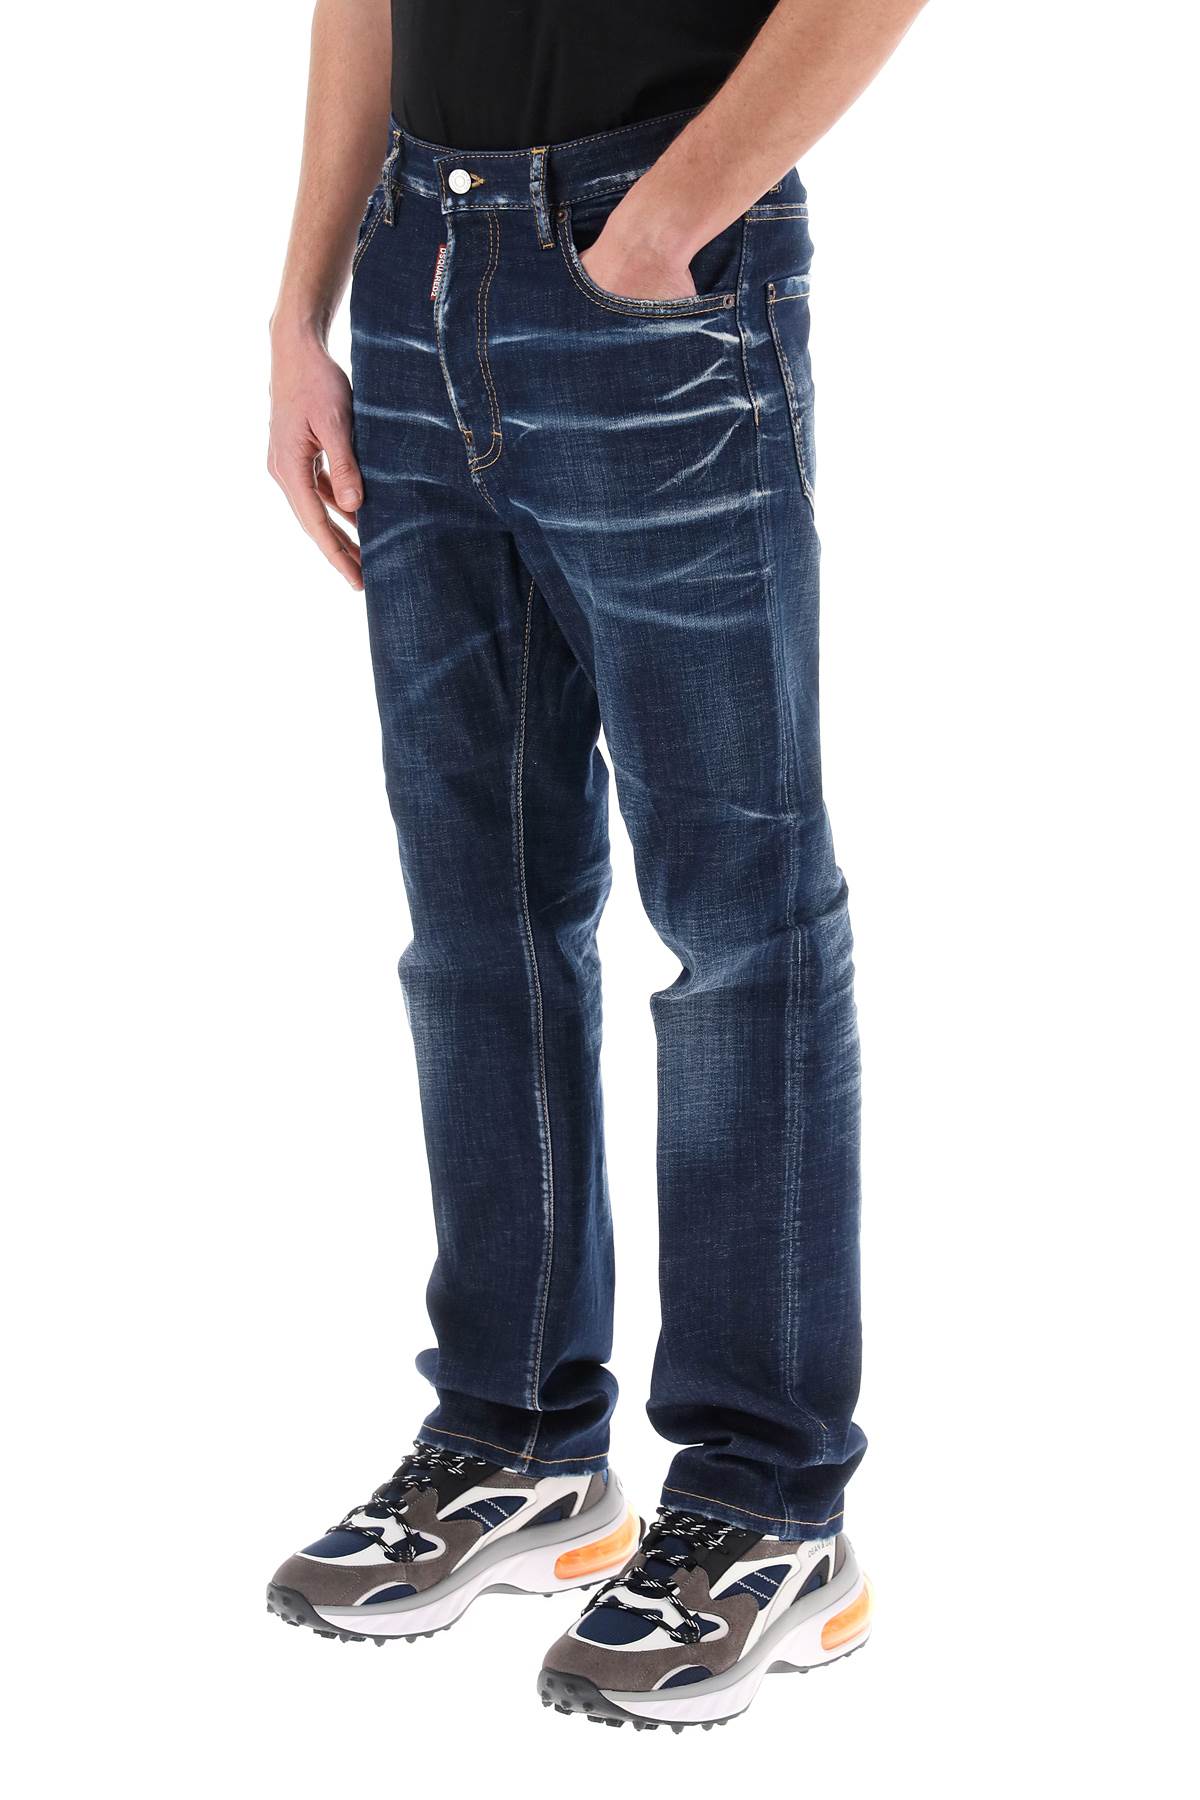 Dsquared2 642 jeans in dark clean wash-3